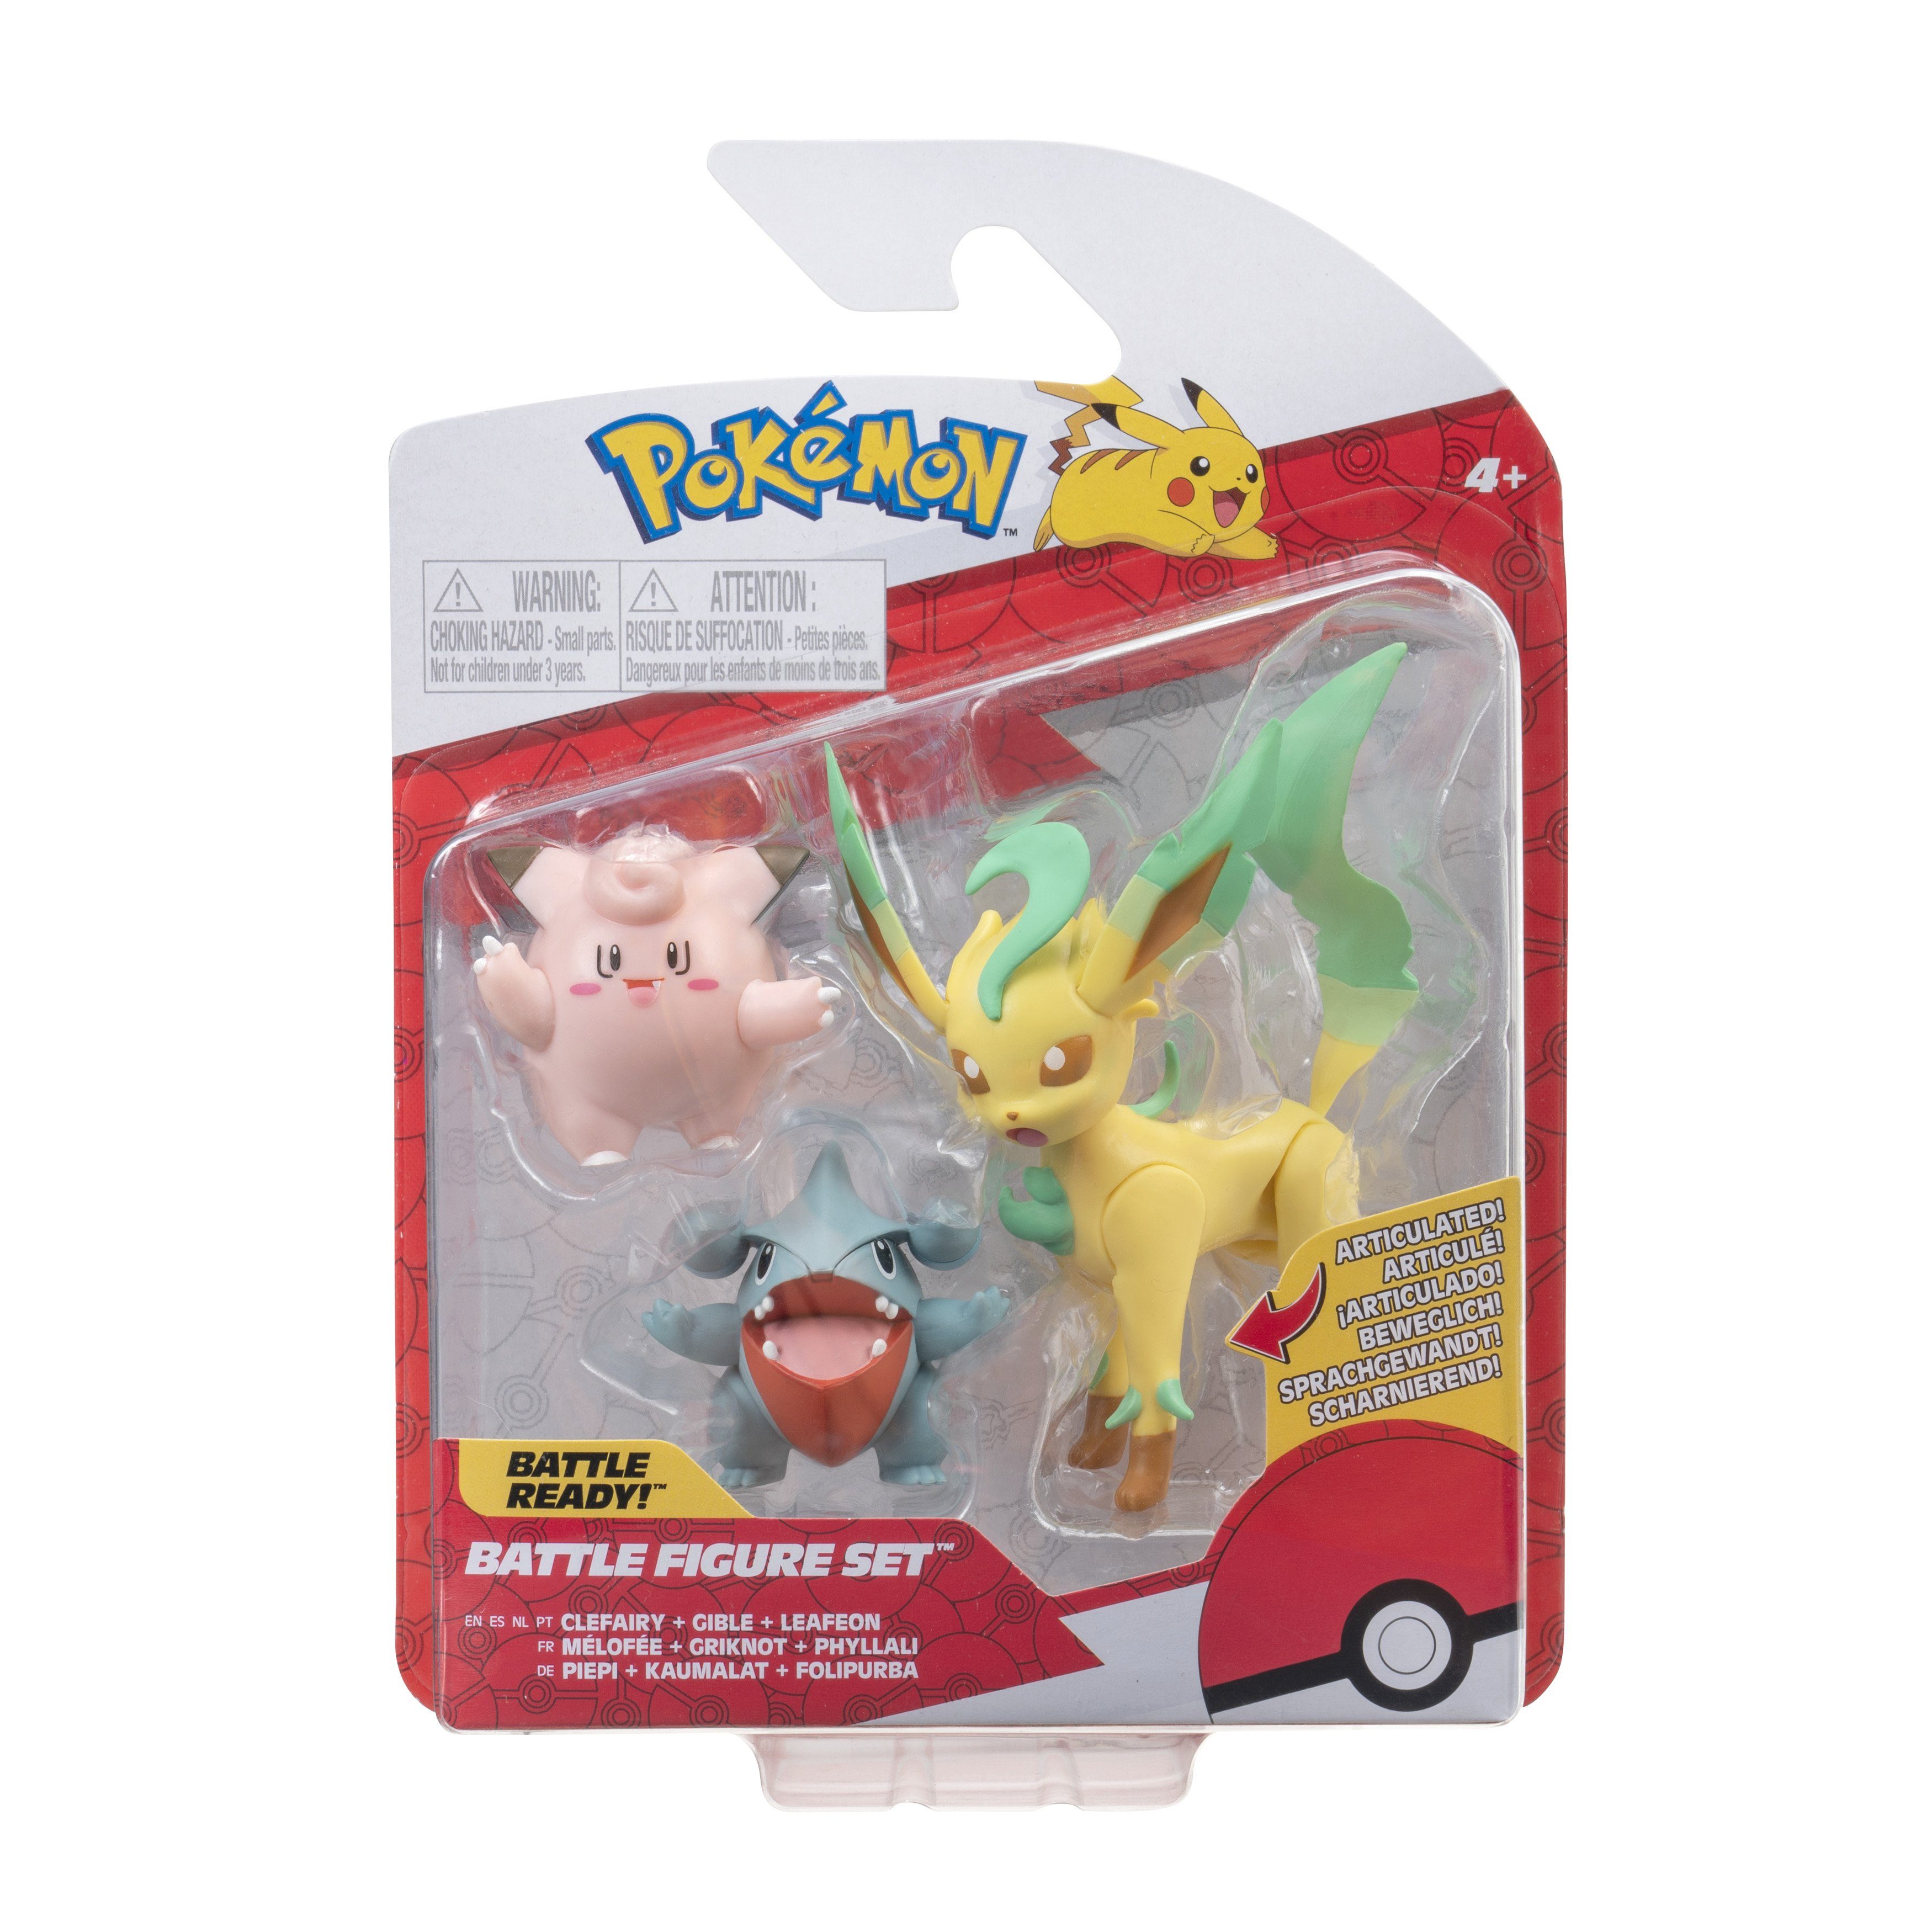 3-tlg) Pack Battle Pokémon 3er Piepi, Kaumalat (Set, & Merchandise-Figur Jazwares Figur - Folipurba, -